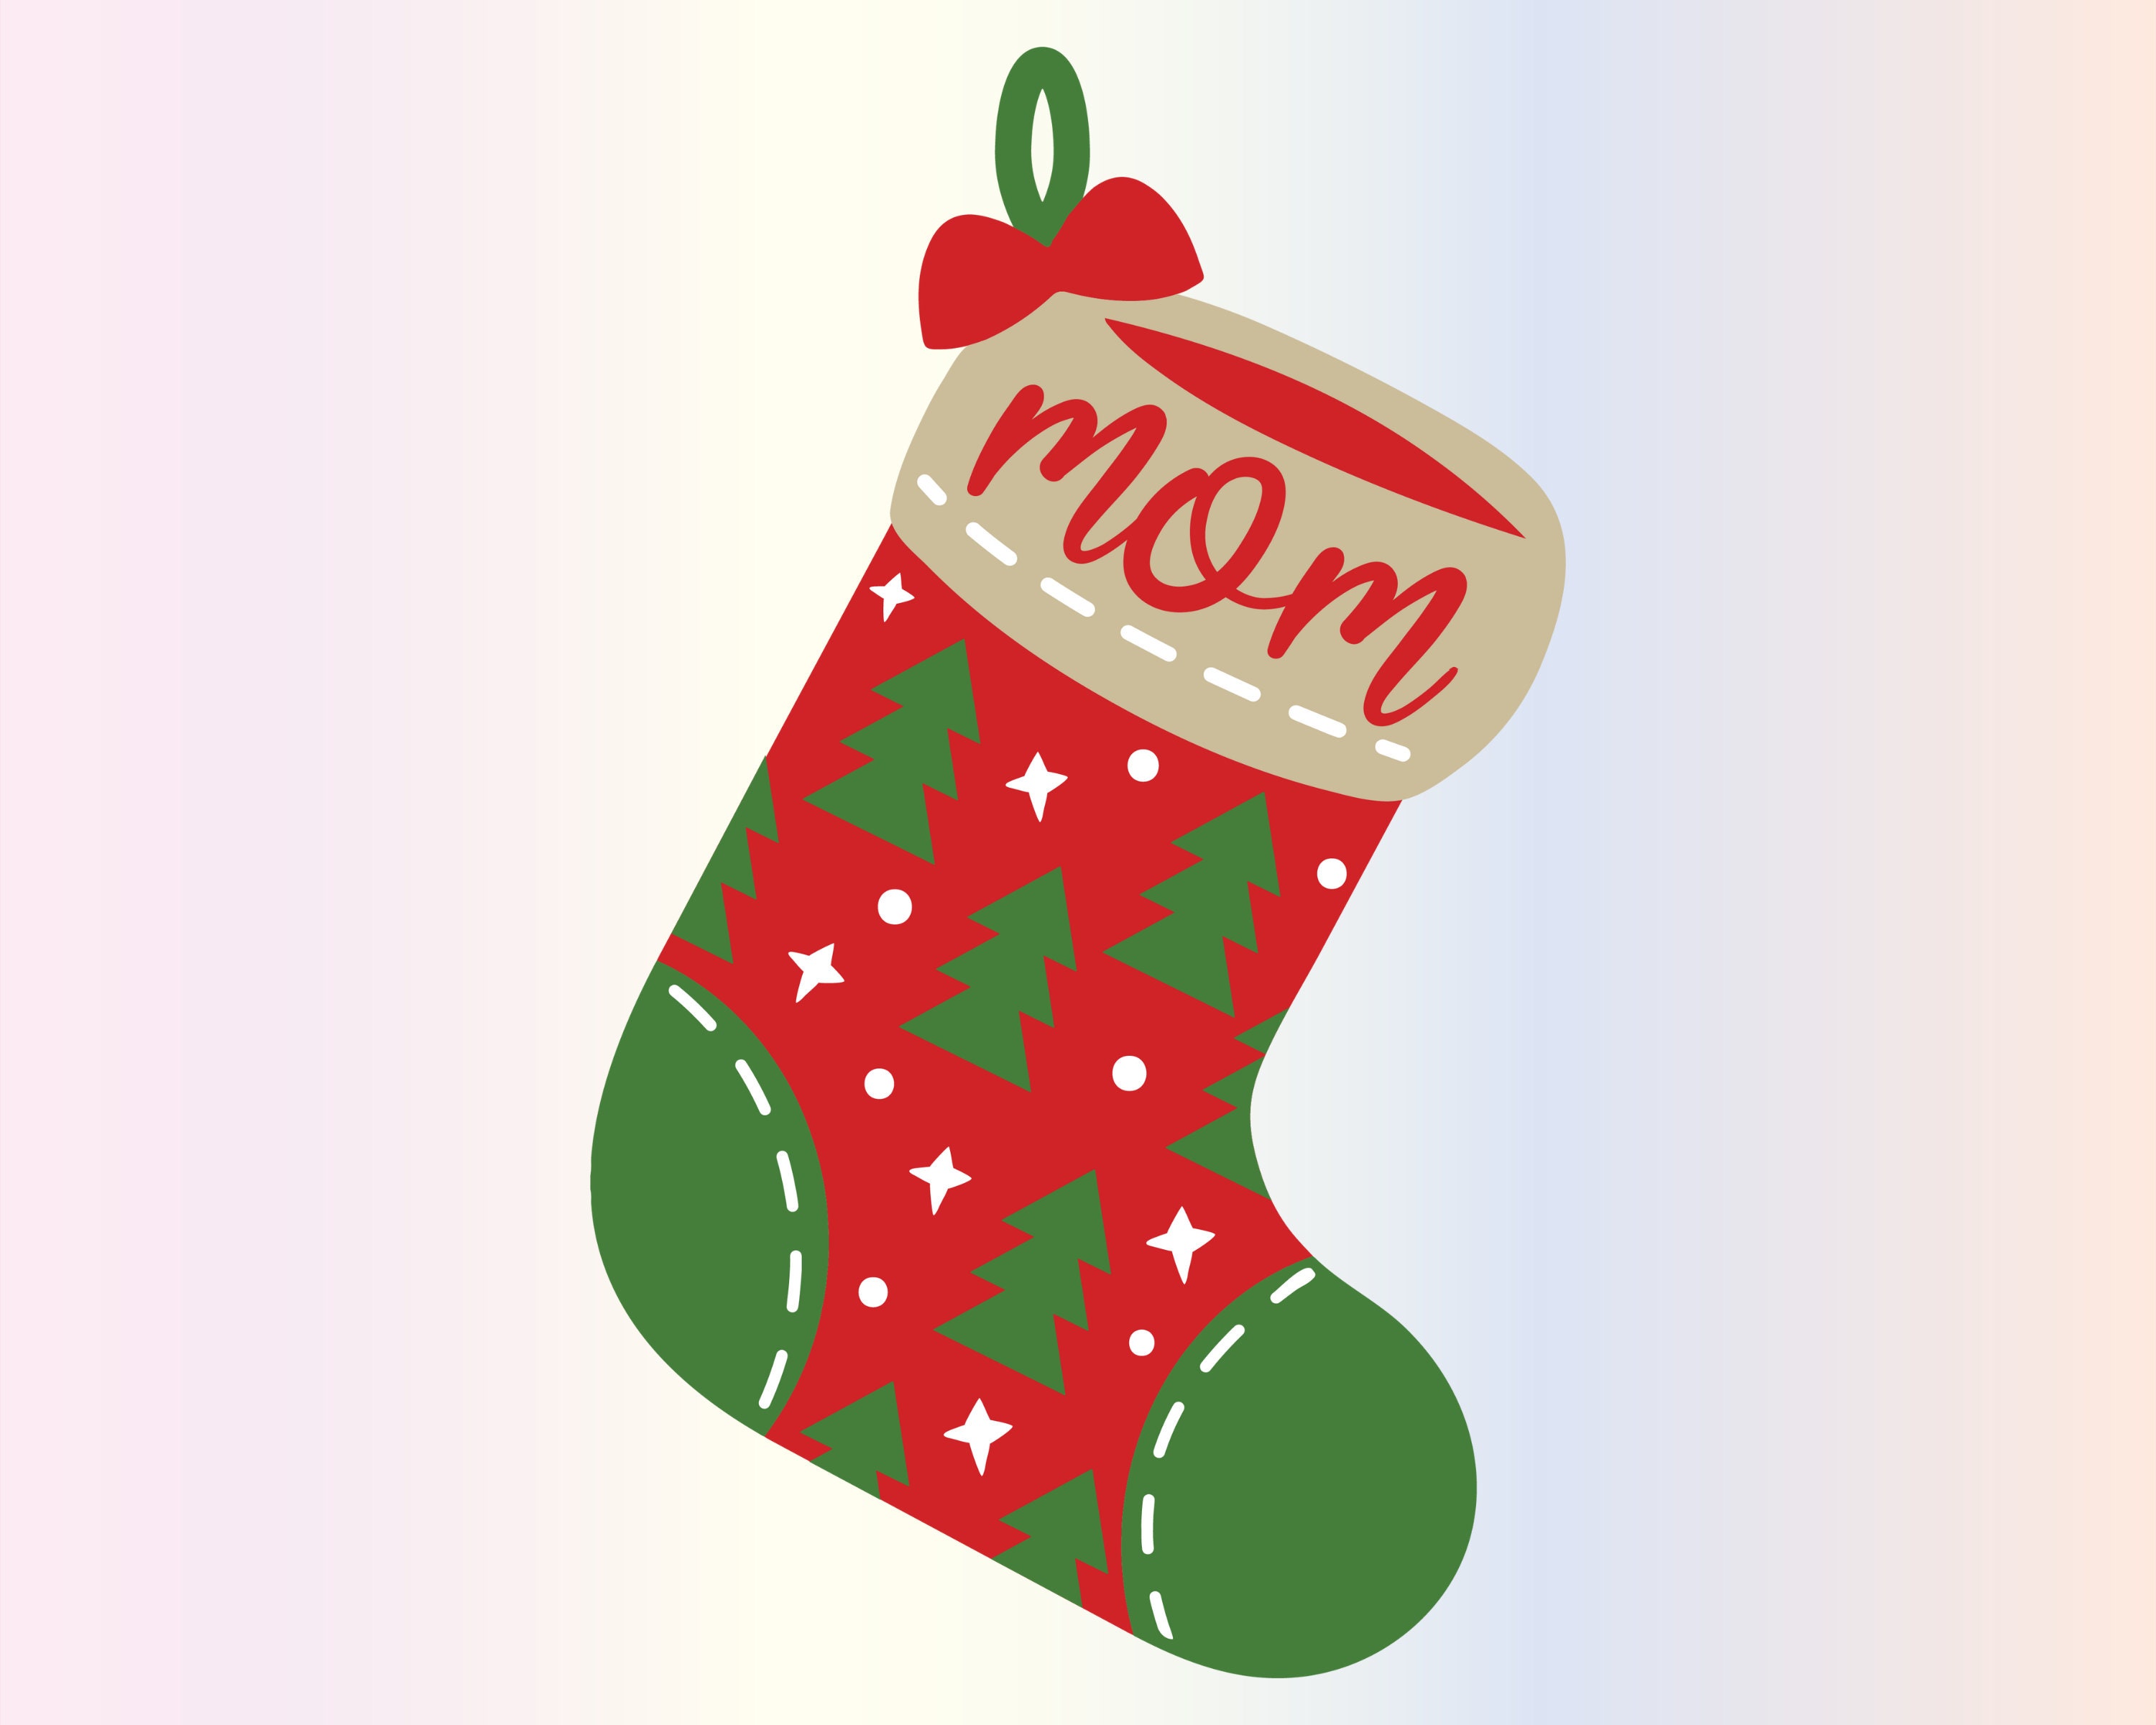 Christmas Stocking - Mom